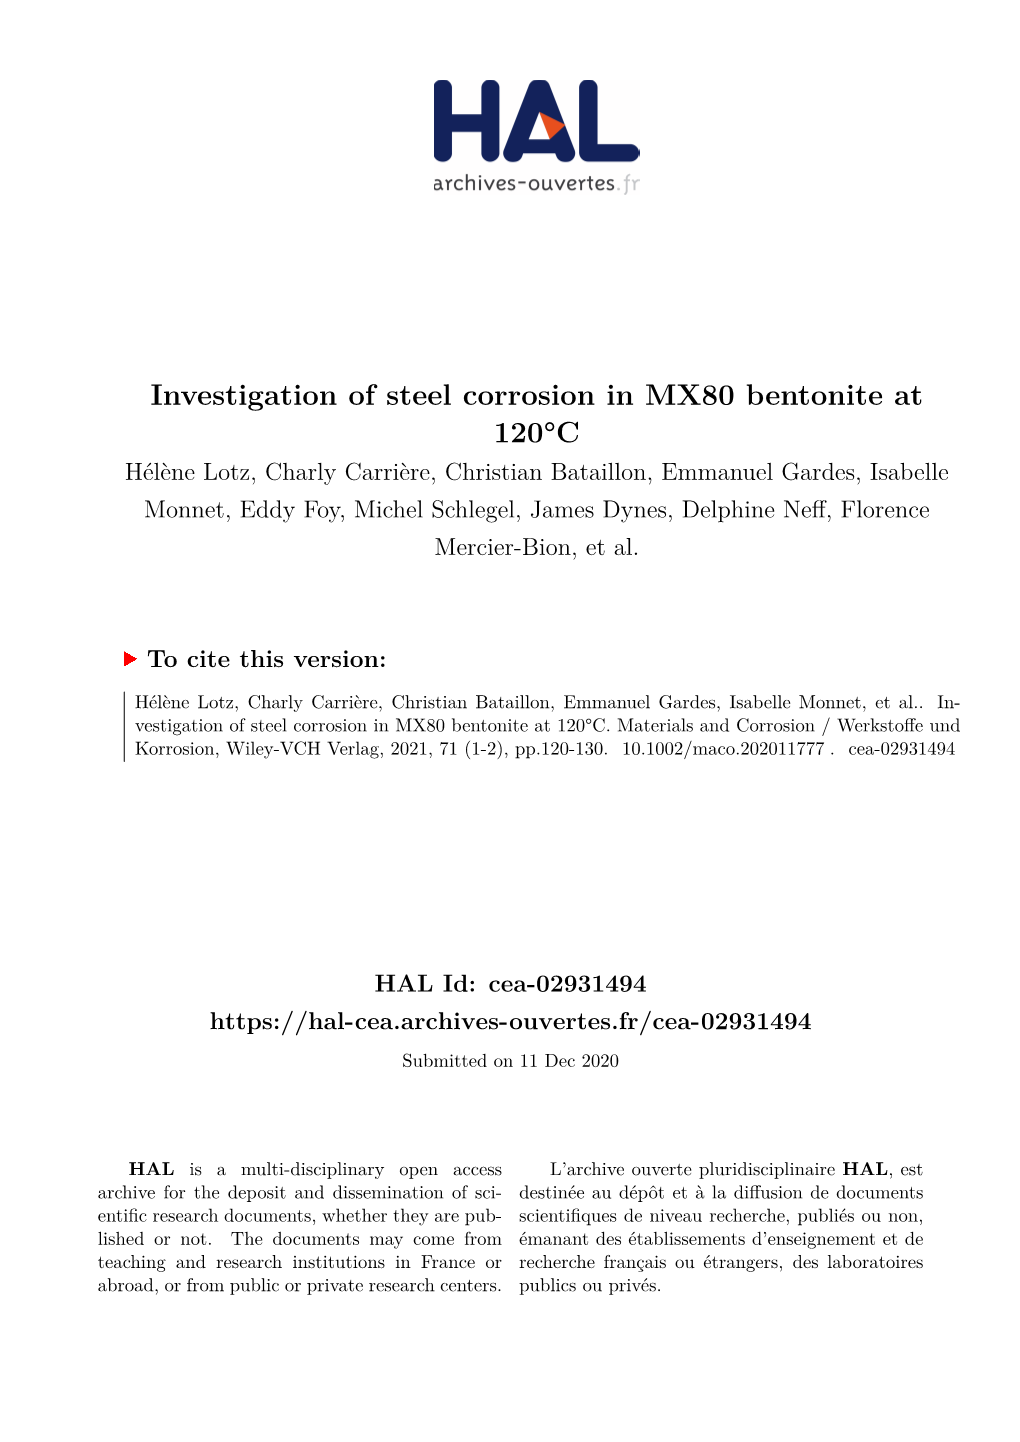 Investigation of Steel Corrosion in MX80 Bentonite at 120°C